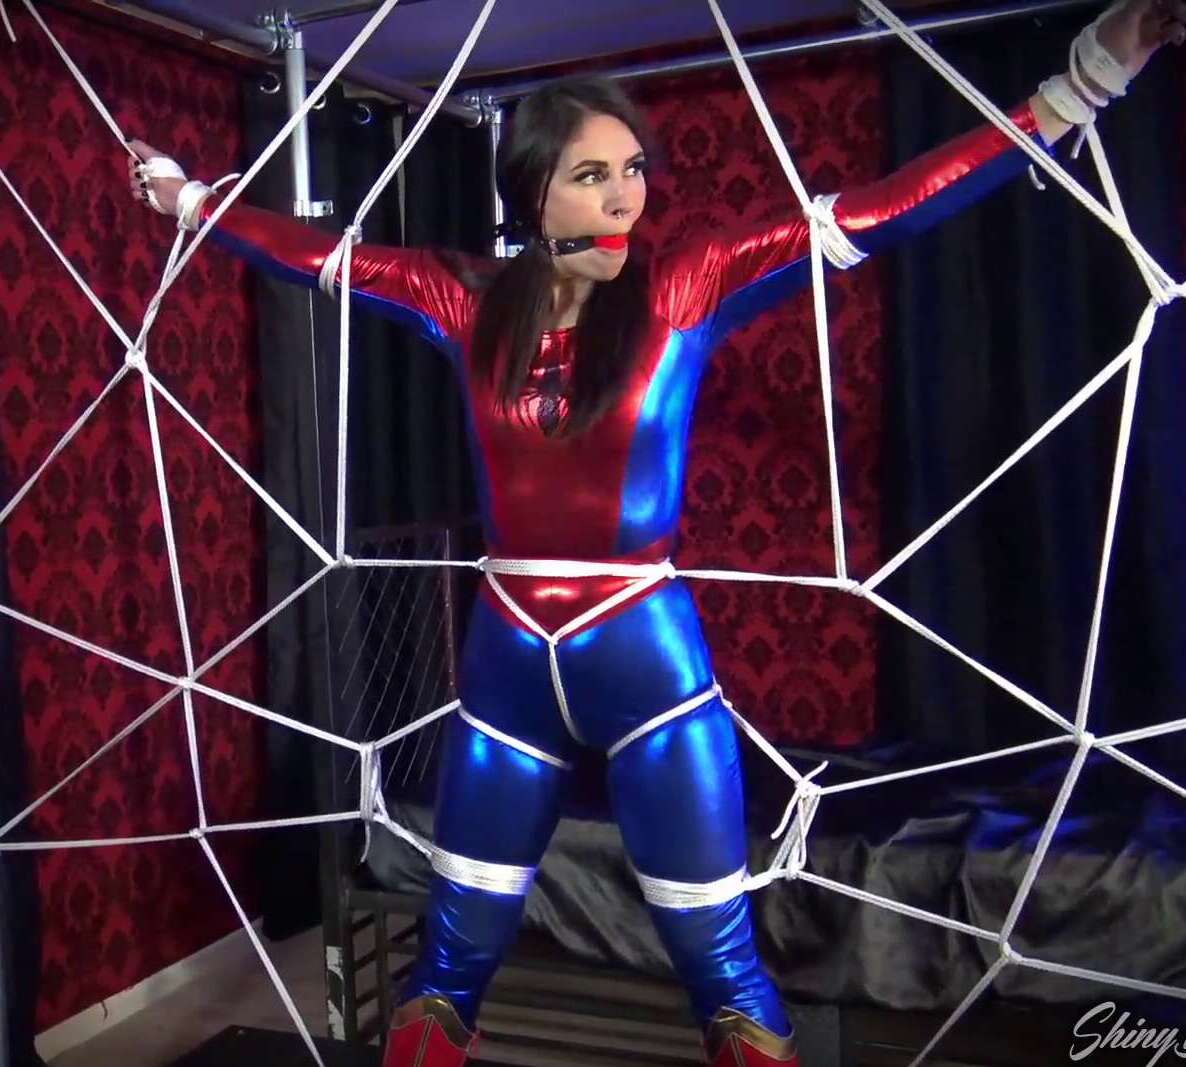 Rope Bondage - Spidergirl struggles hard!!! - Spidergirl Caught in Her Web